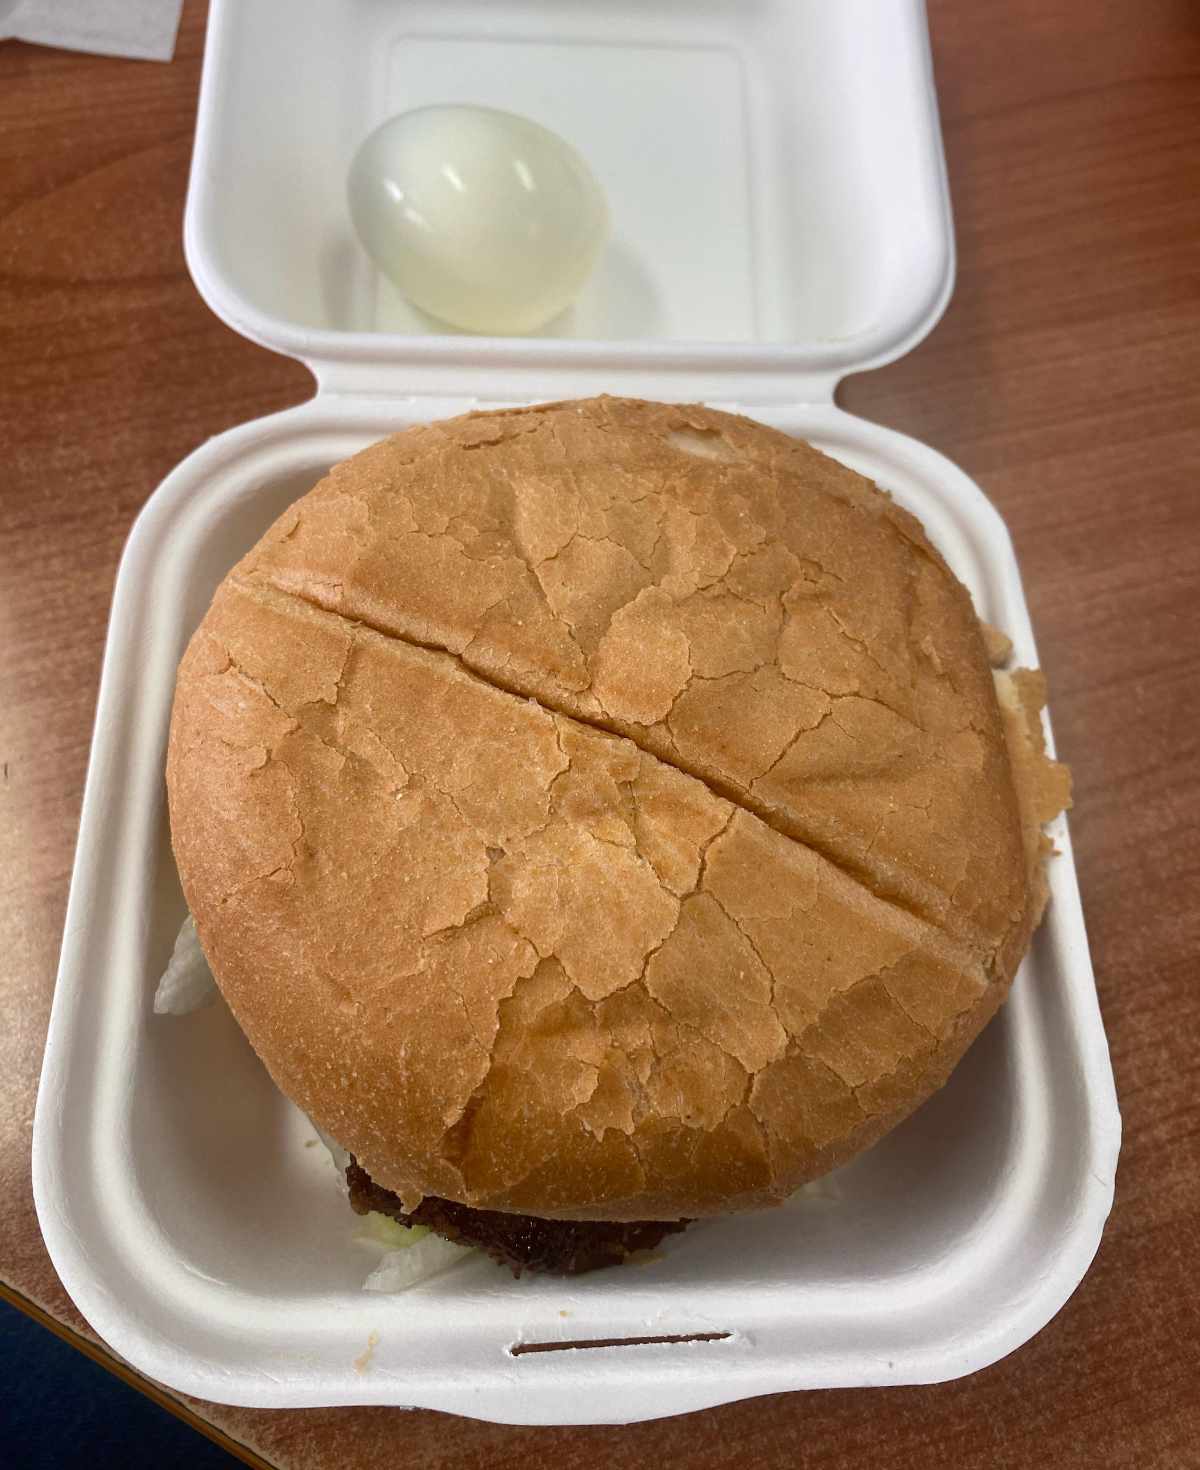 I asked for extra egg on my hamburger...